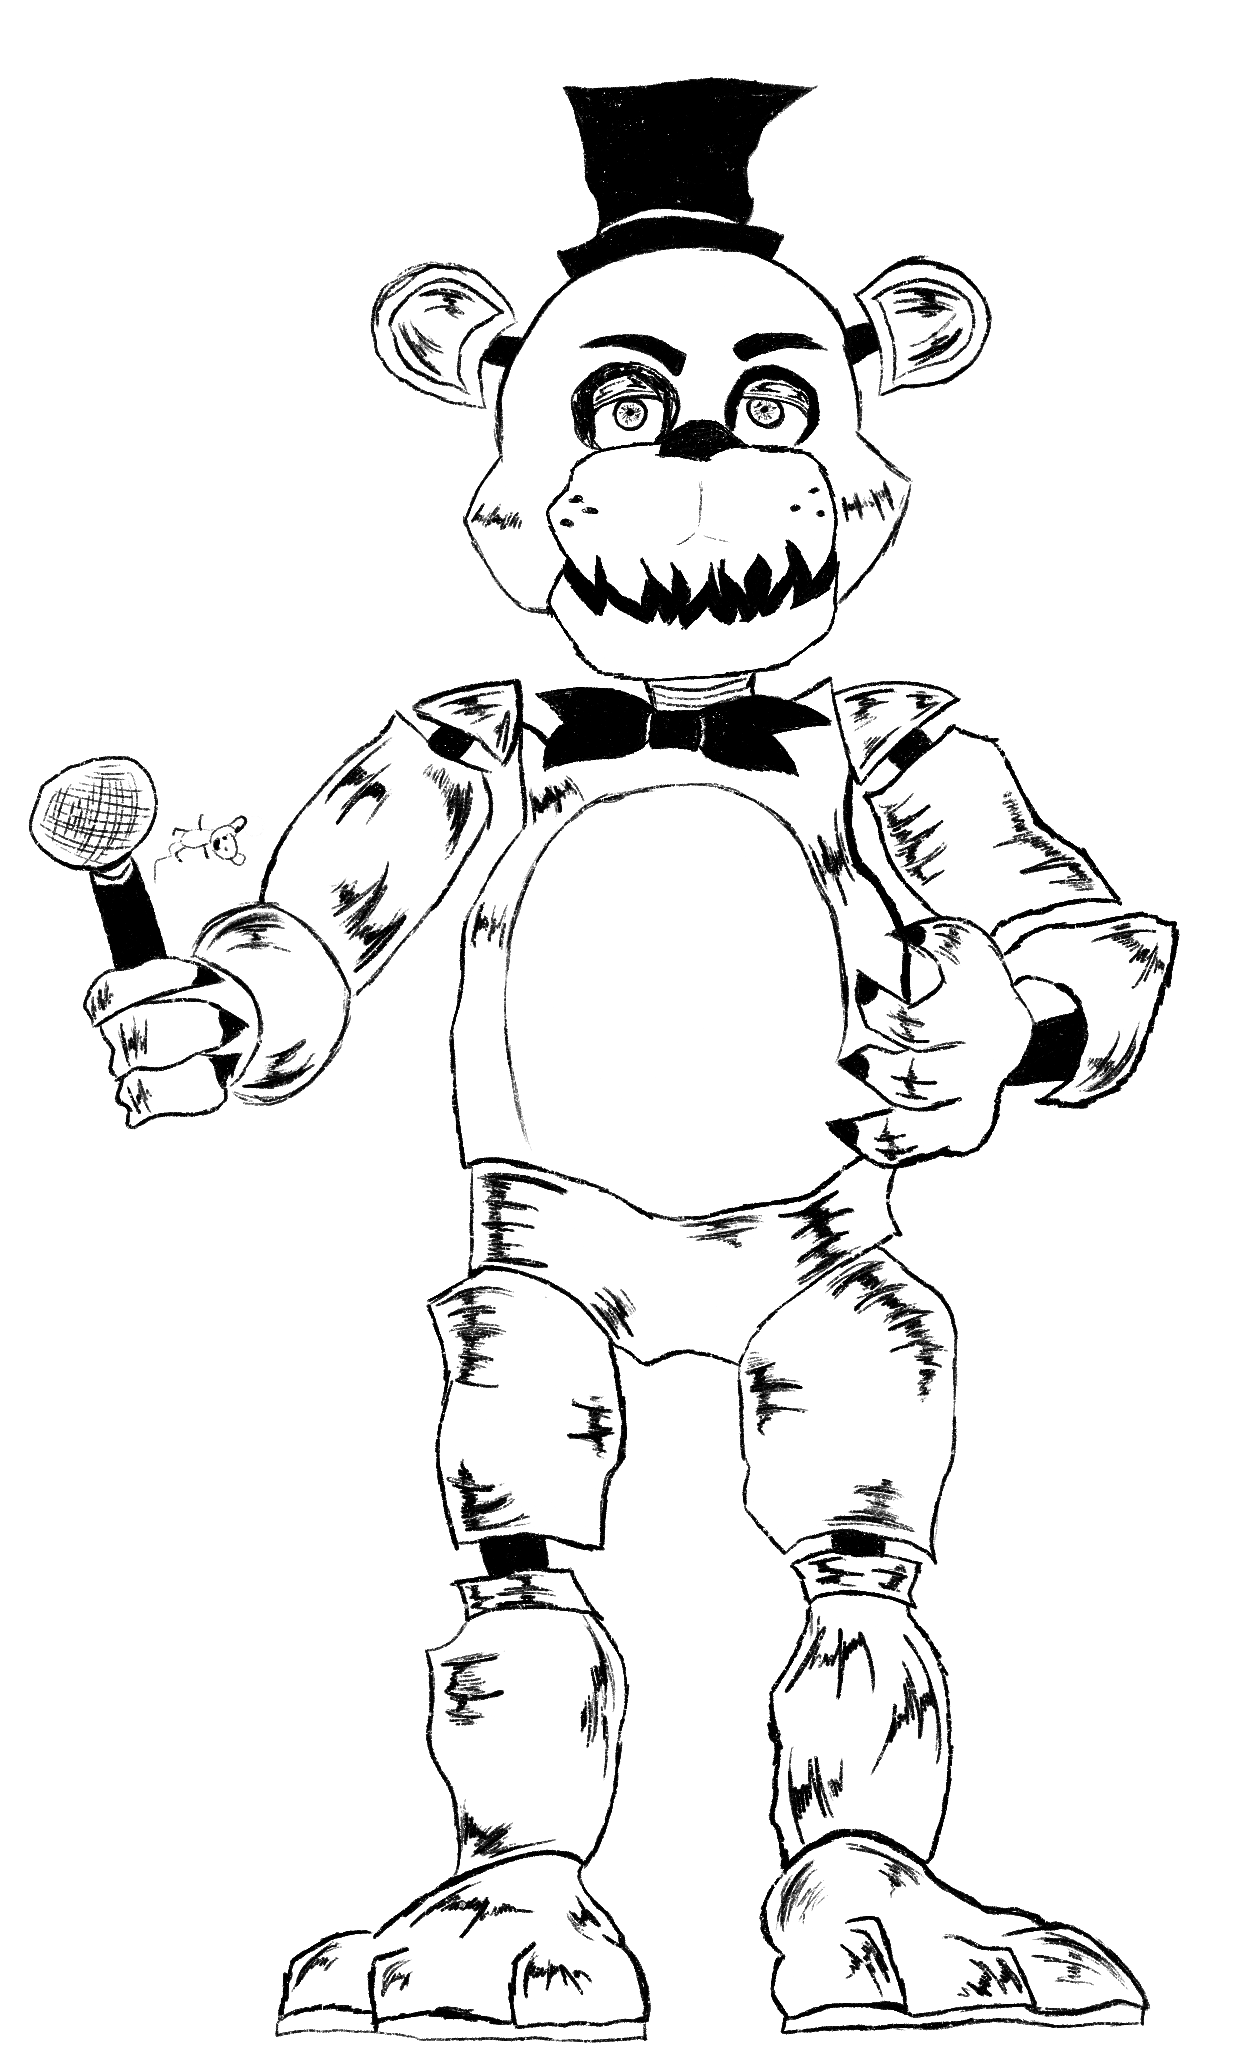 Five Nights at Freddy's 1: Playable Animatronics